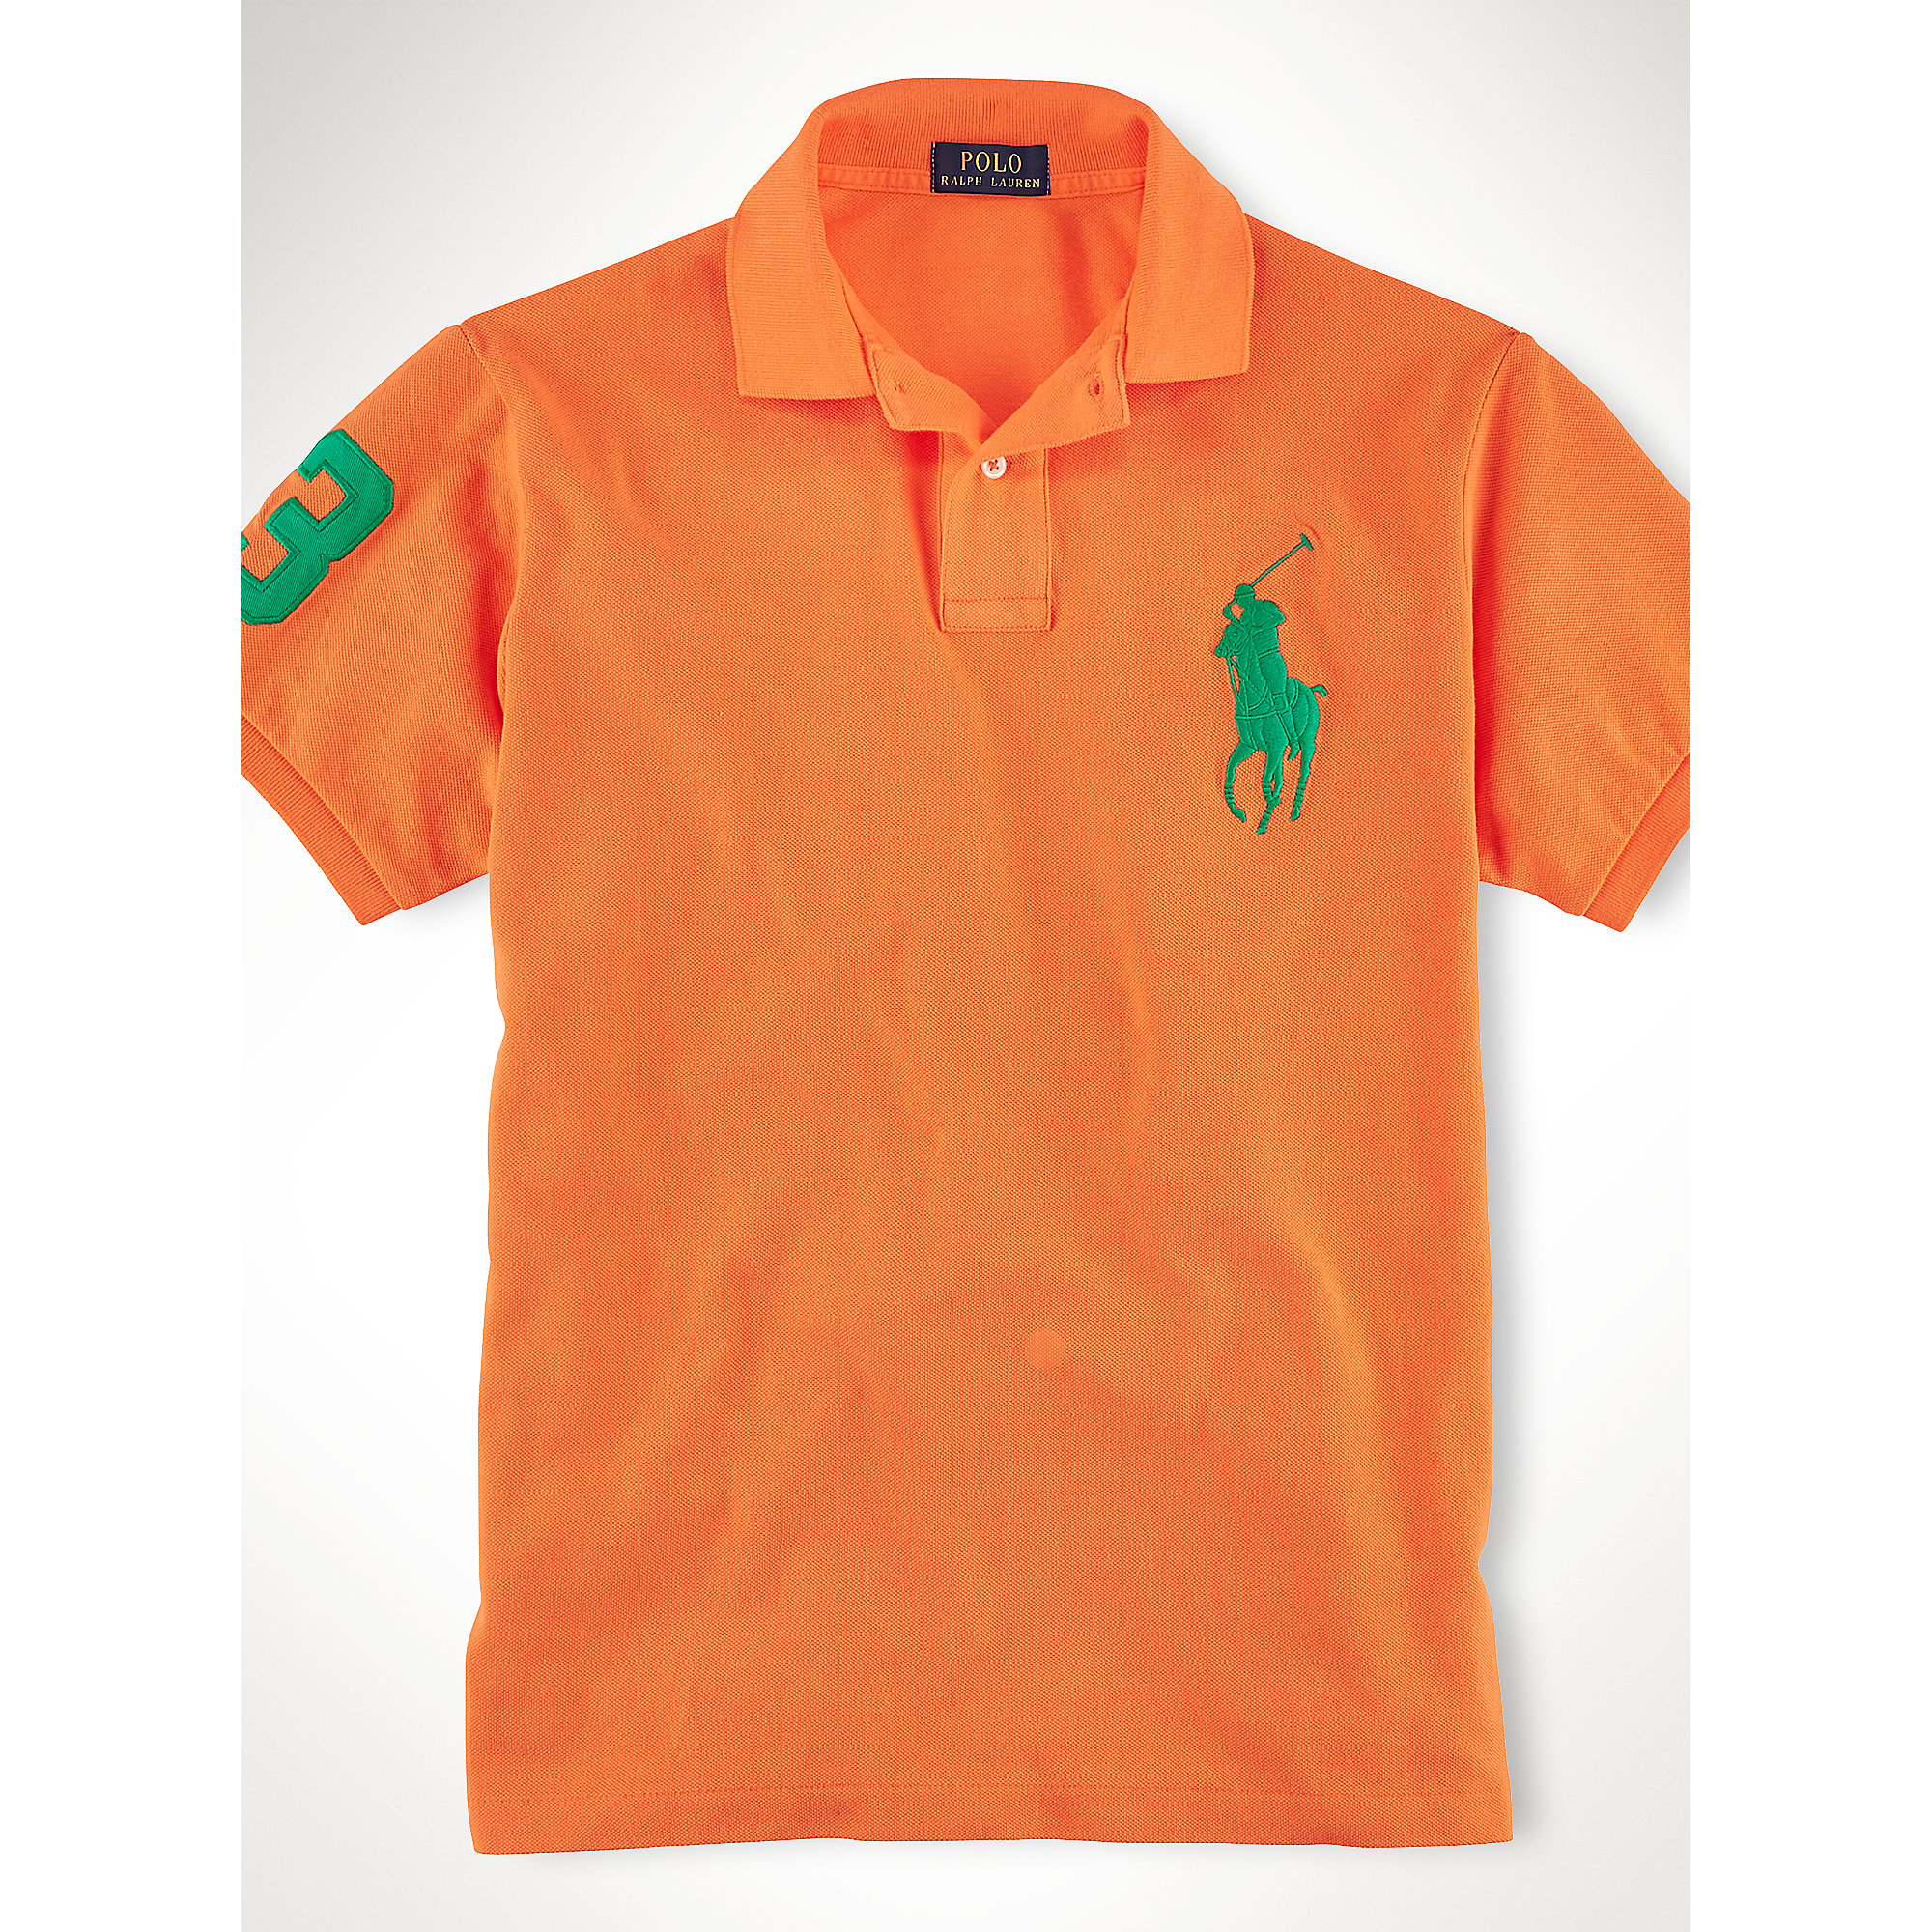 Polo Ralph Lauren Custom-Fit Big Pony Polo Shirt in Orange for Men - Lyst